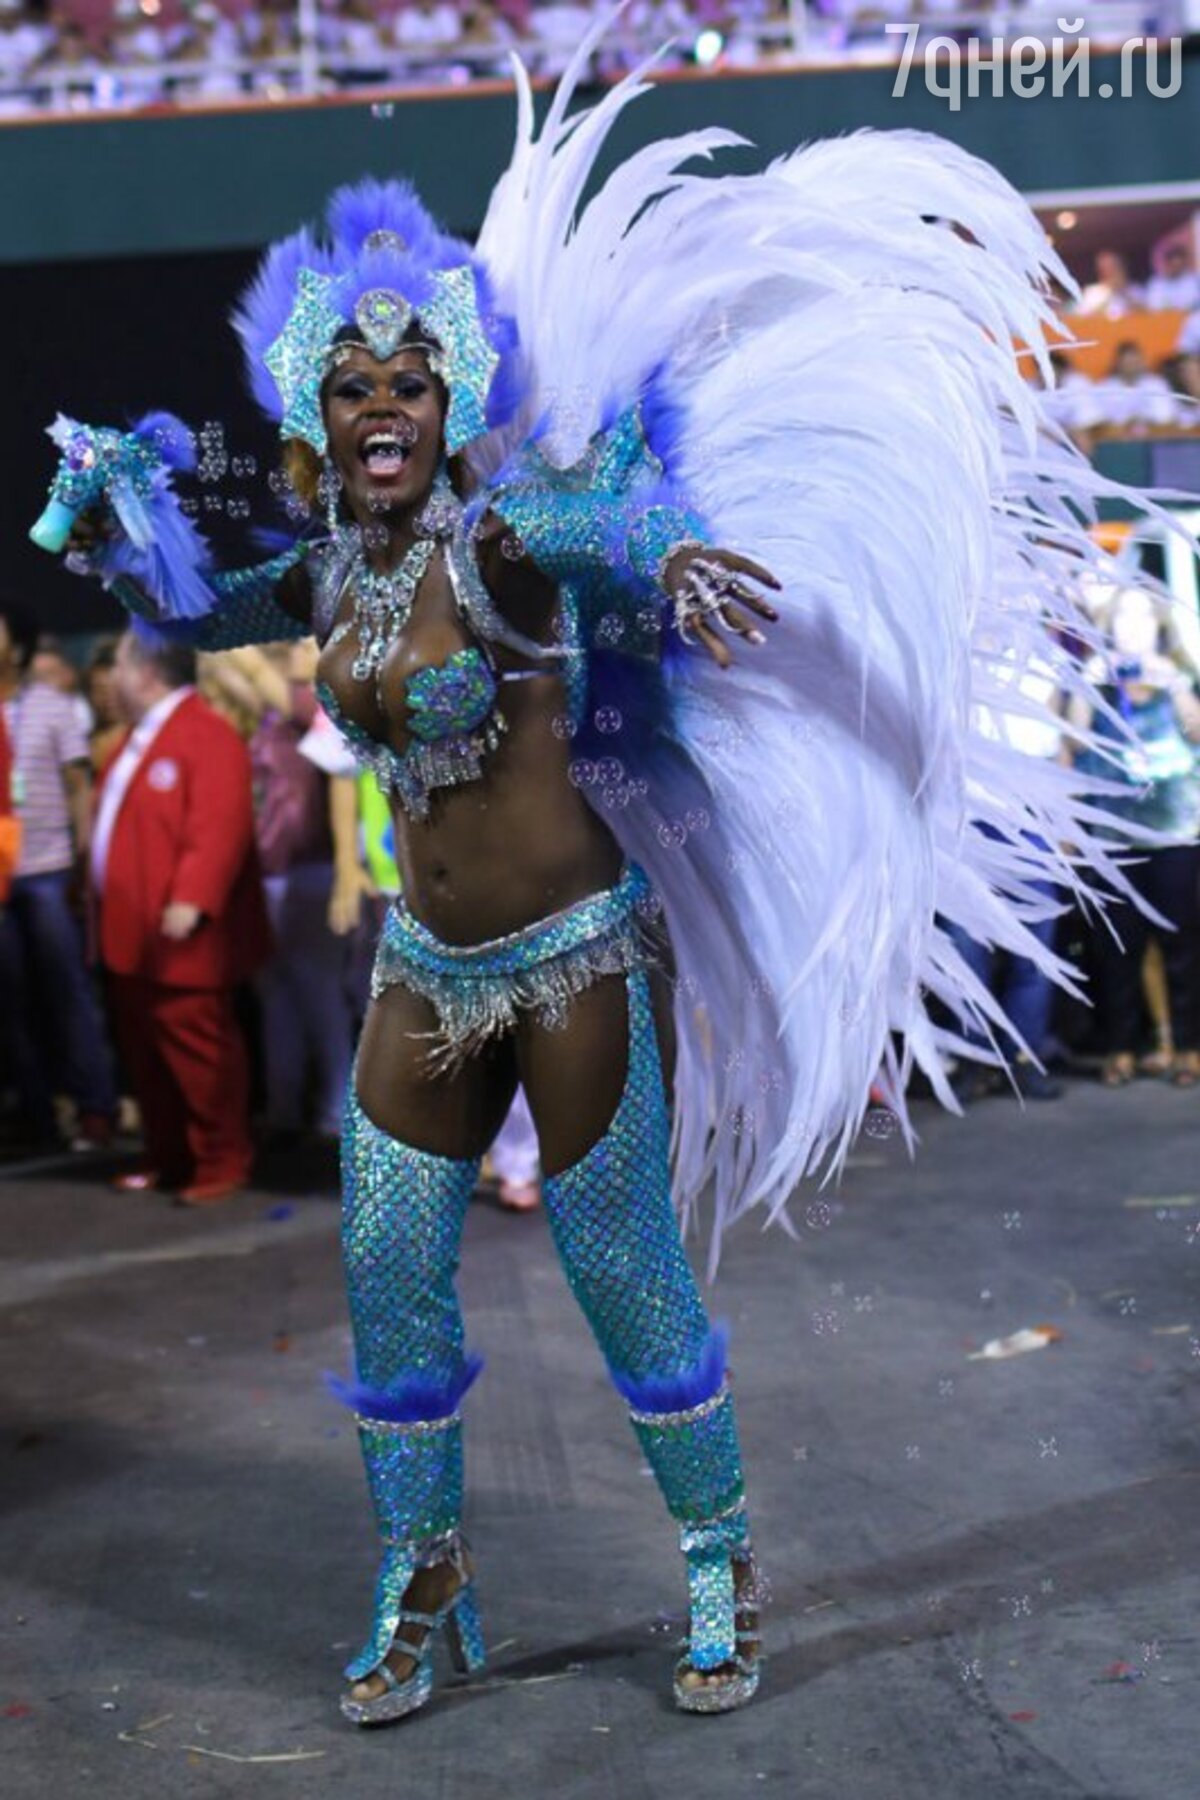 Порно на карнавале в рио де жанейро (58 фото)